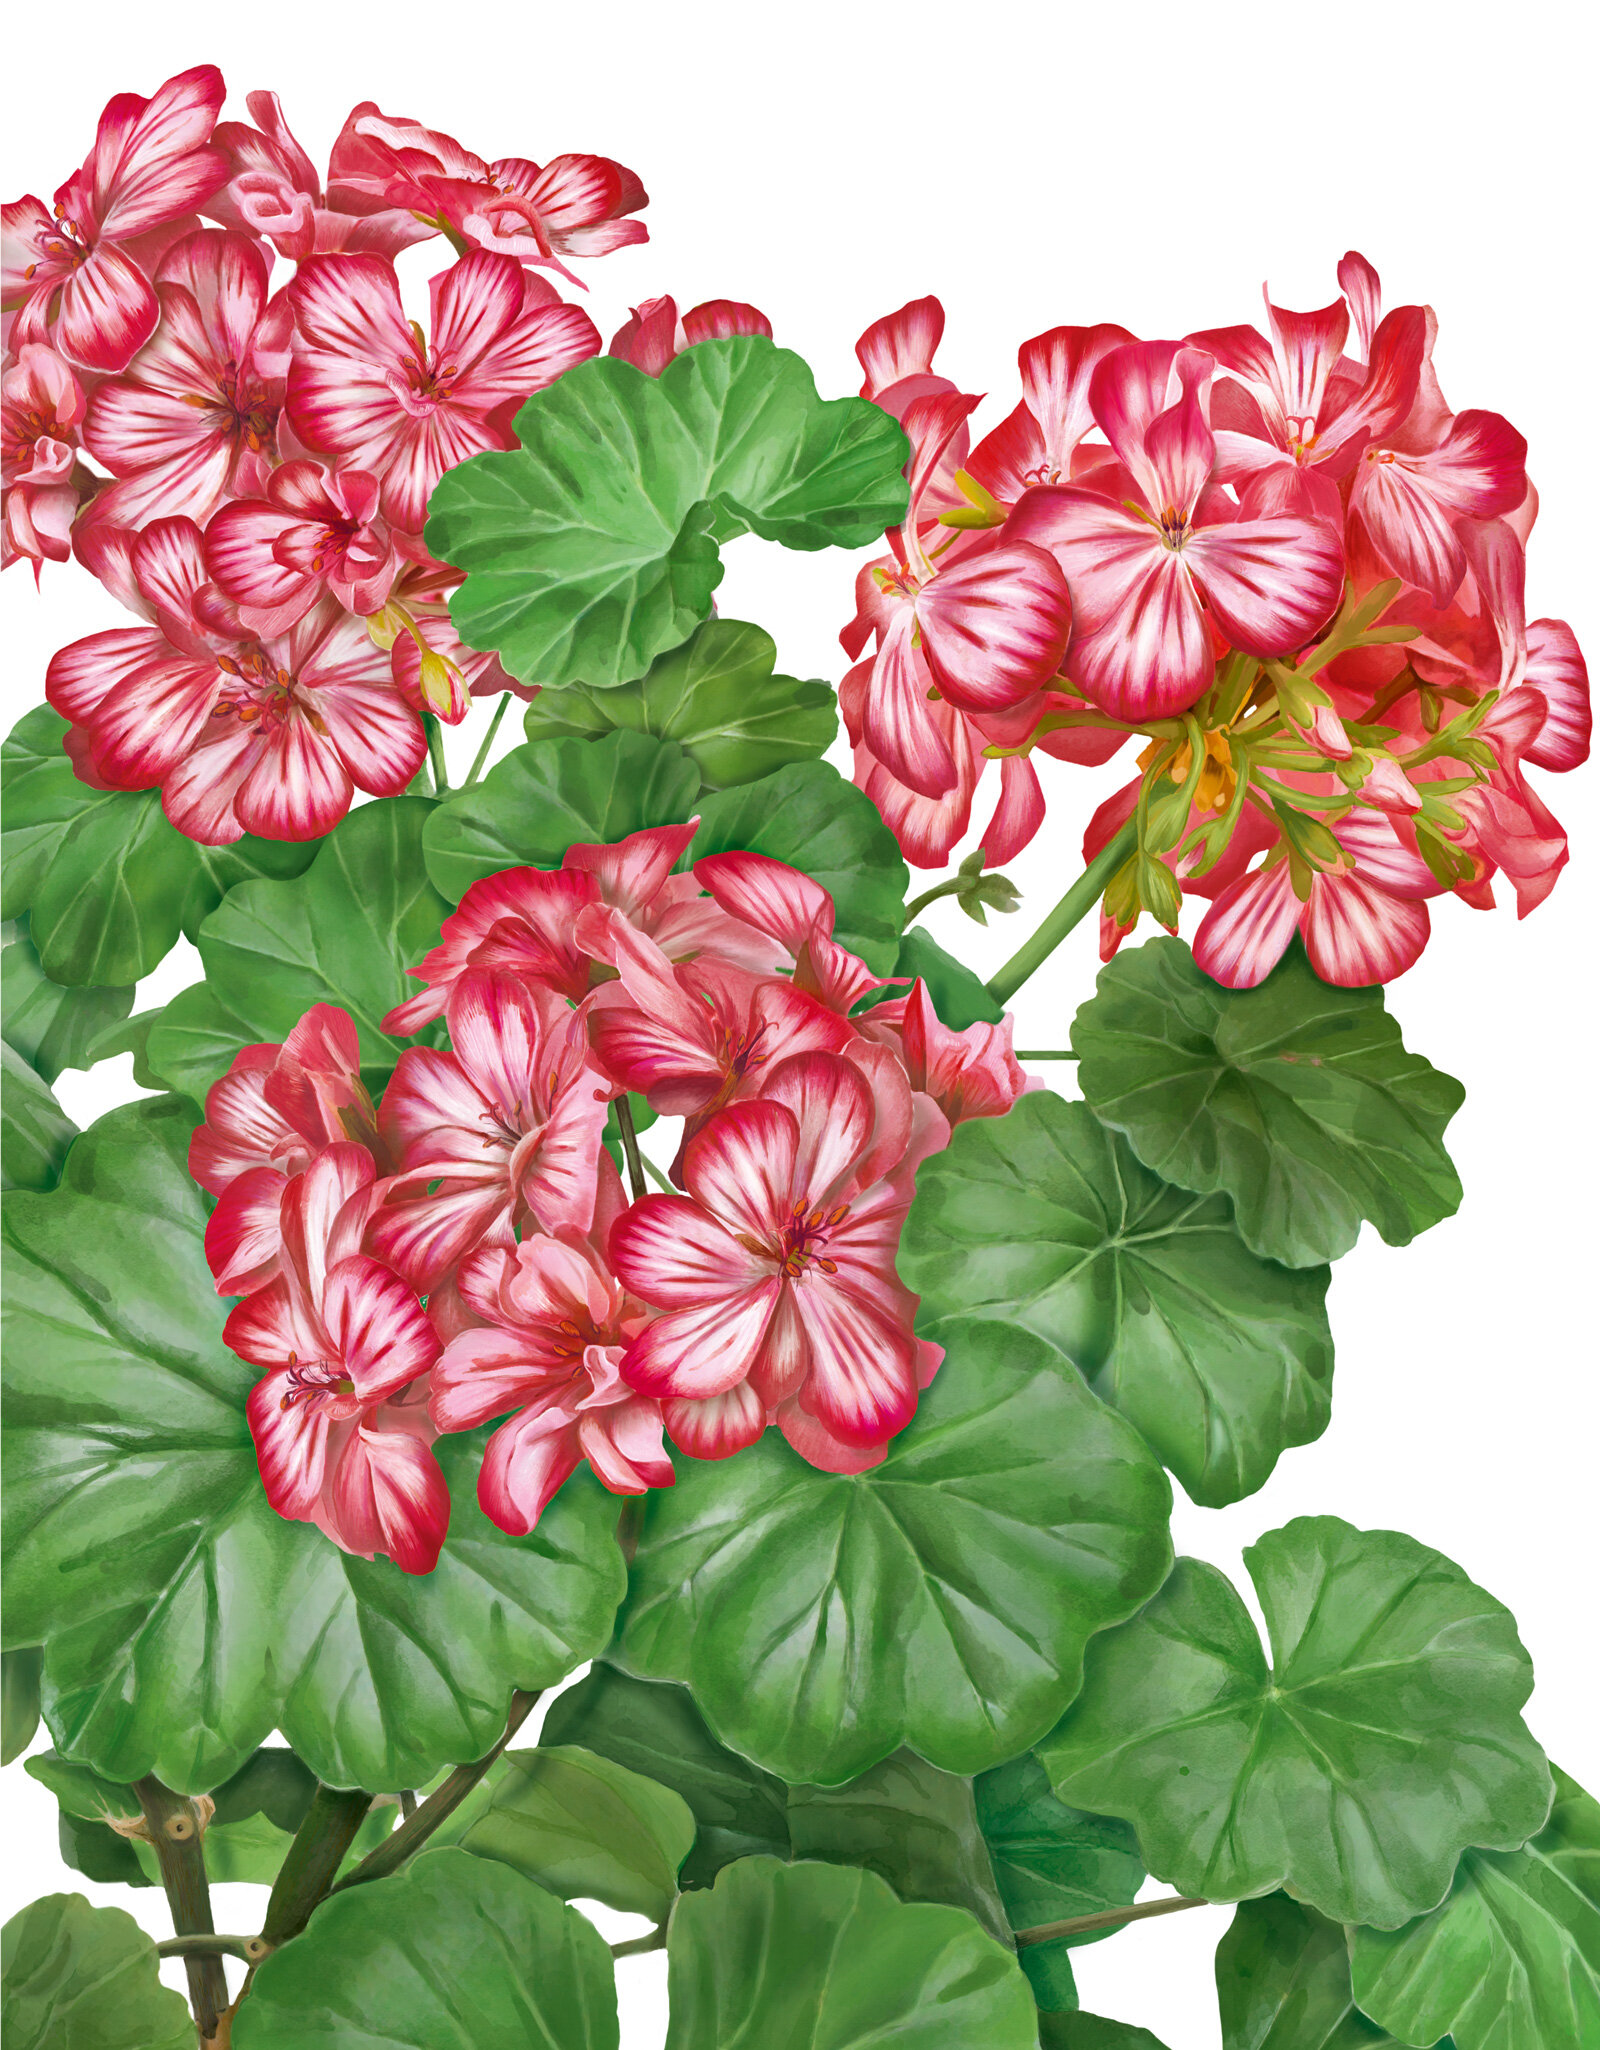 oculus-illustration-pflanzenillustration-hauert-verpackungsdesign-geranium